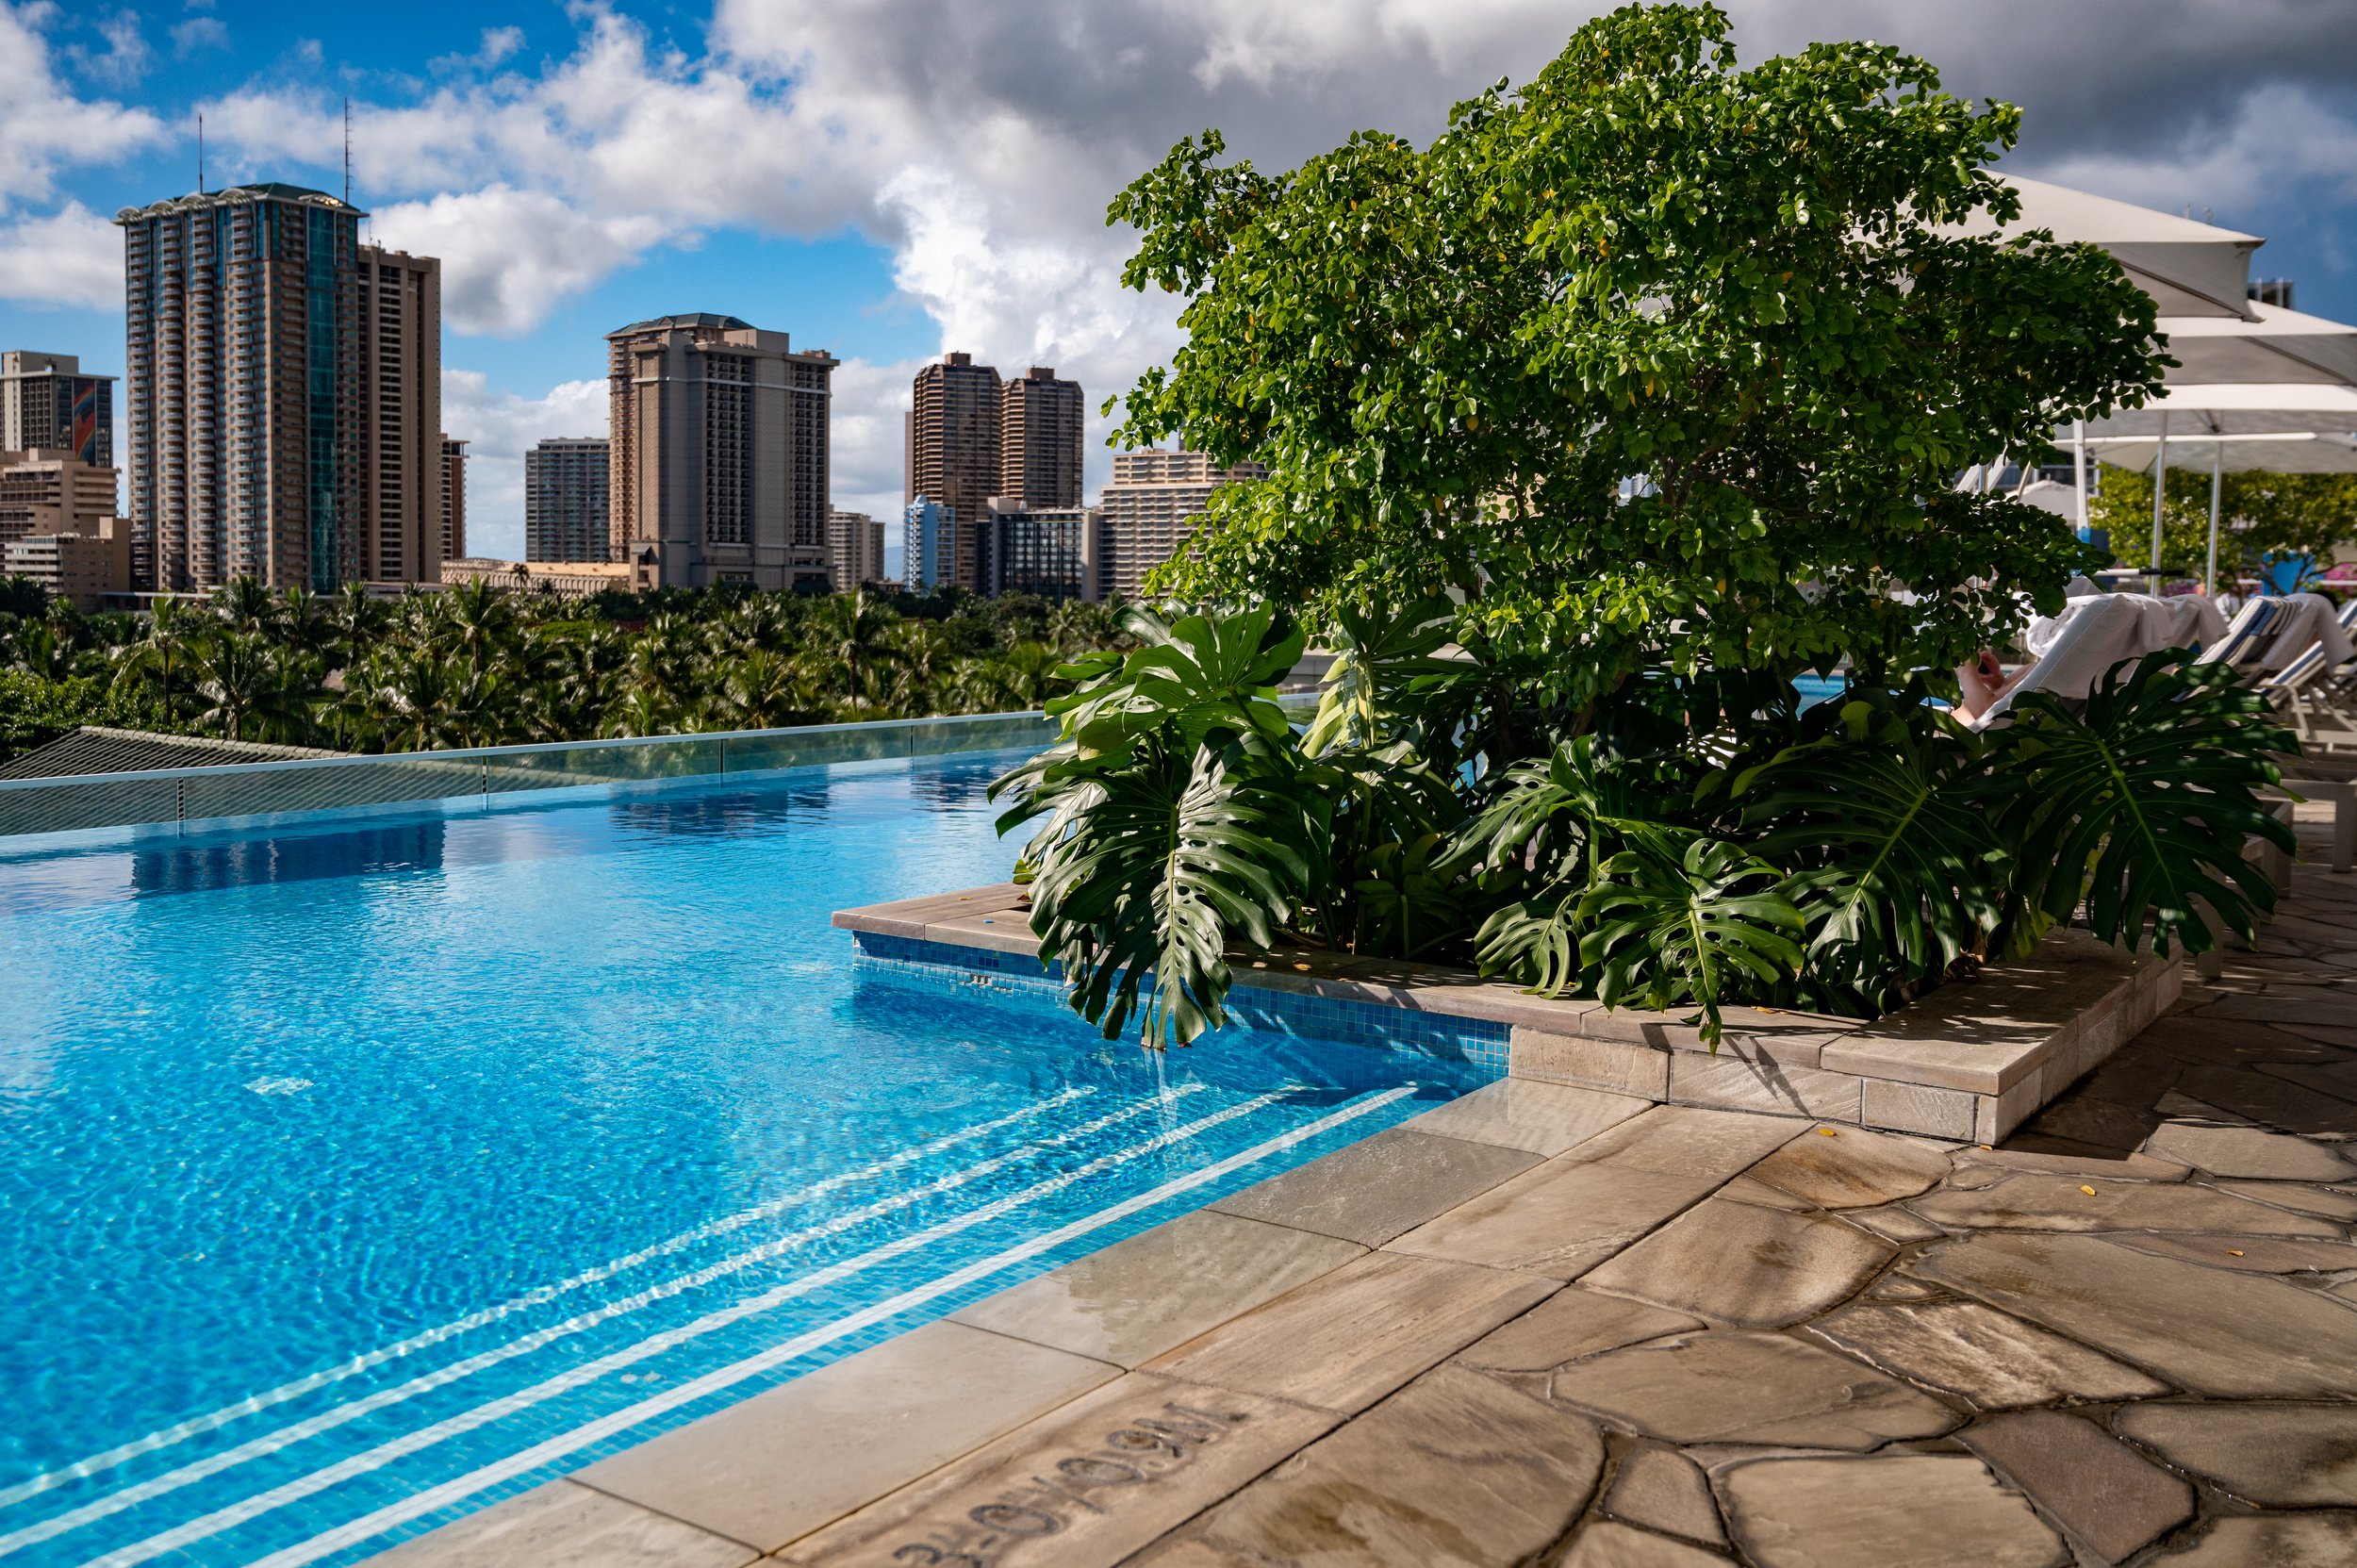 The Ritz Carlton Waikiki Pool